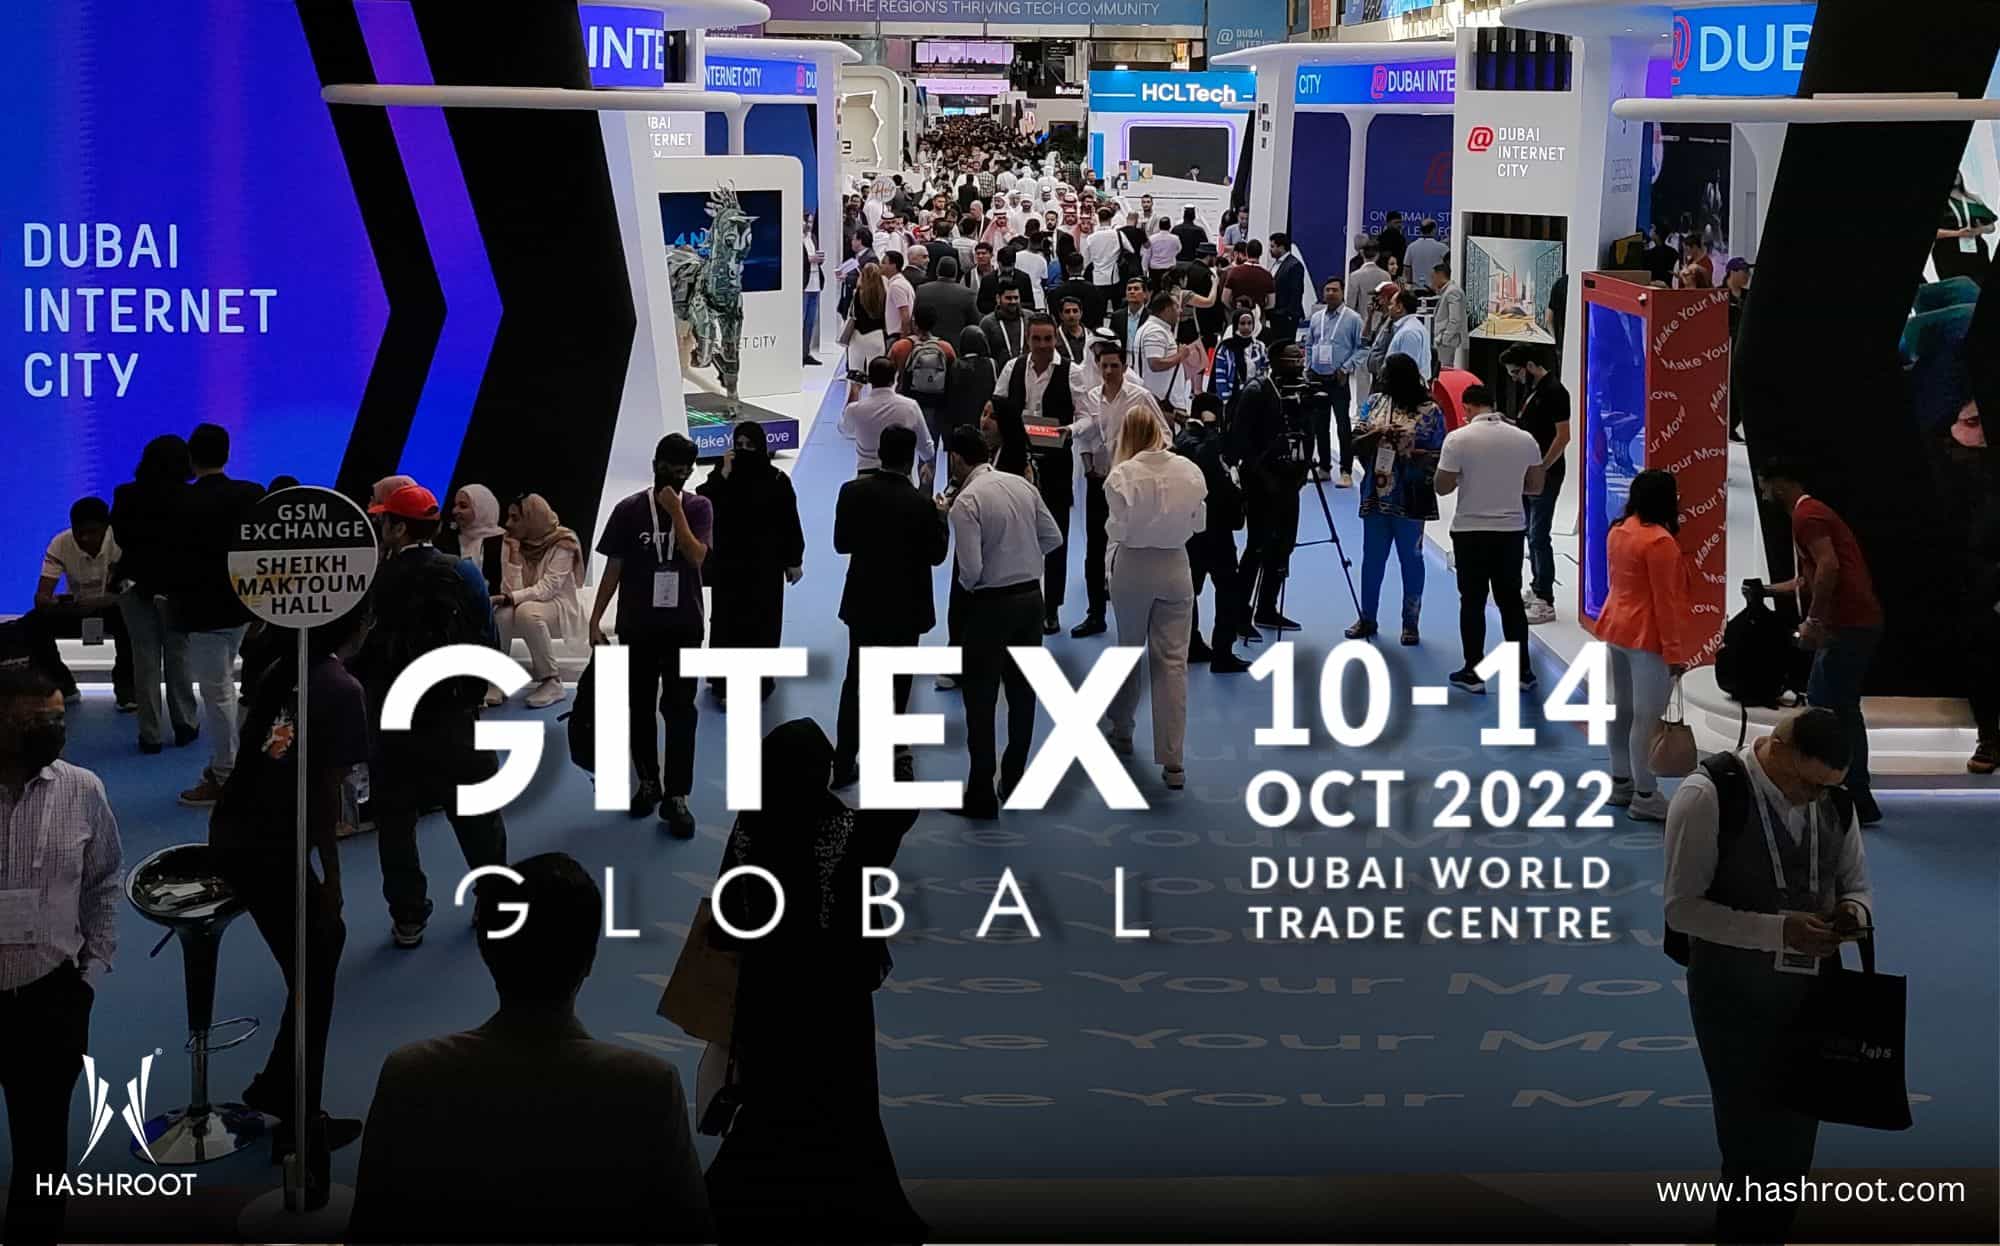 HashRoot at GITEX Global 2022 Dubai